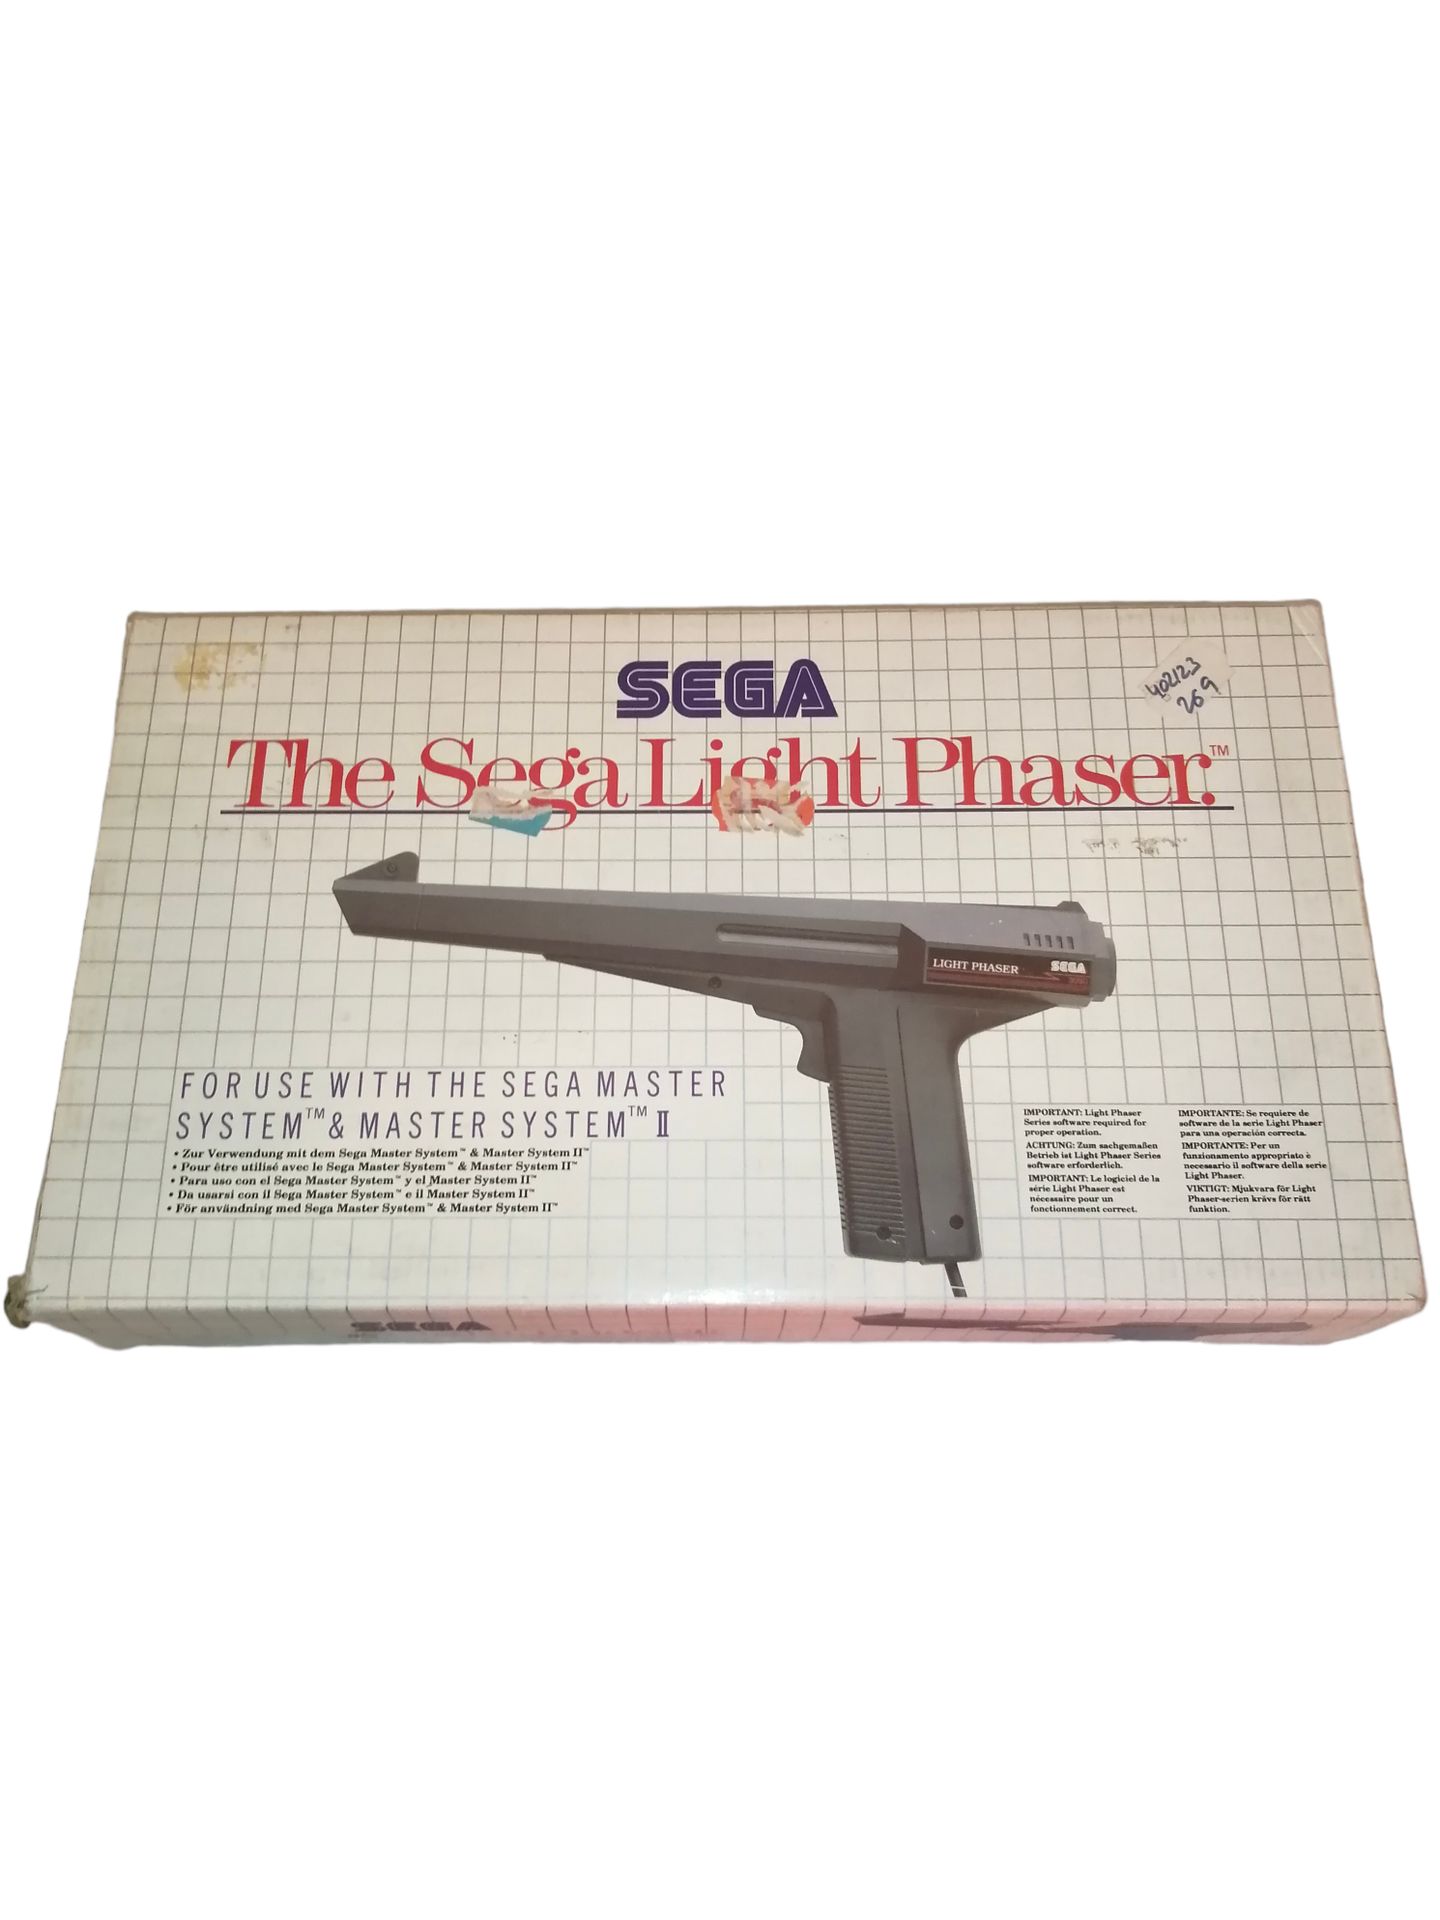 Null SEGA - Sega Light Phaser Master System - 
Scatola in buone condizioni,
(Nes&hellip;